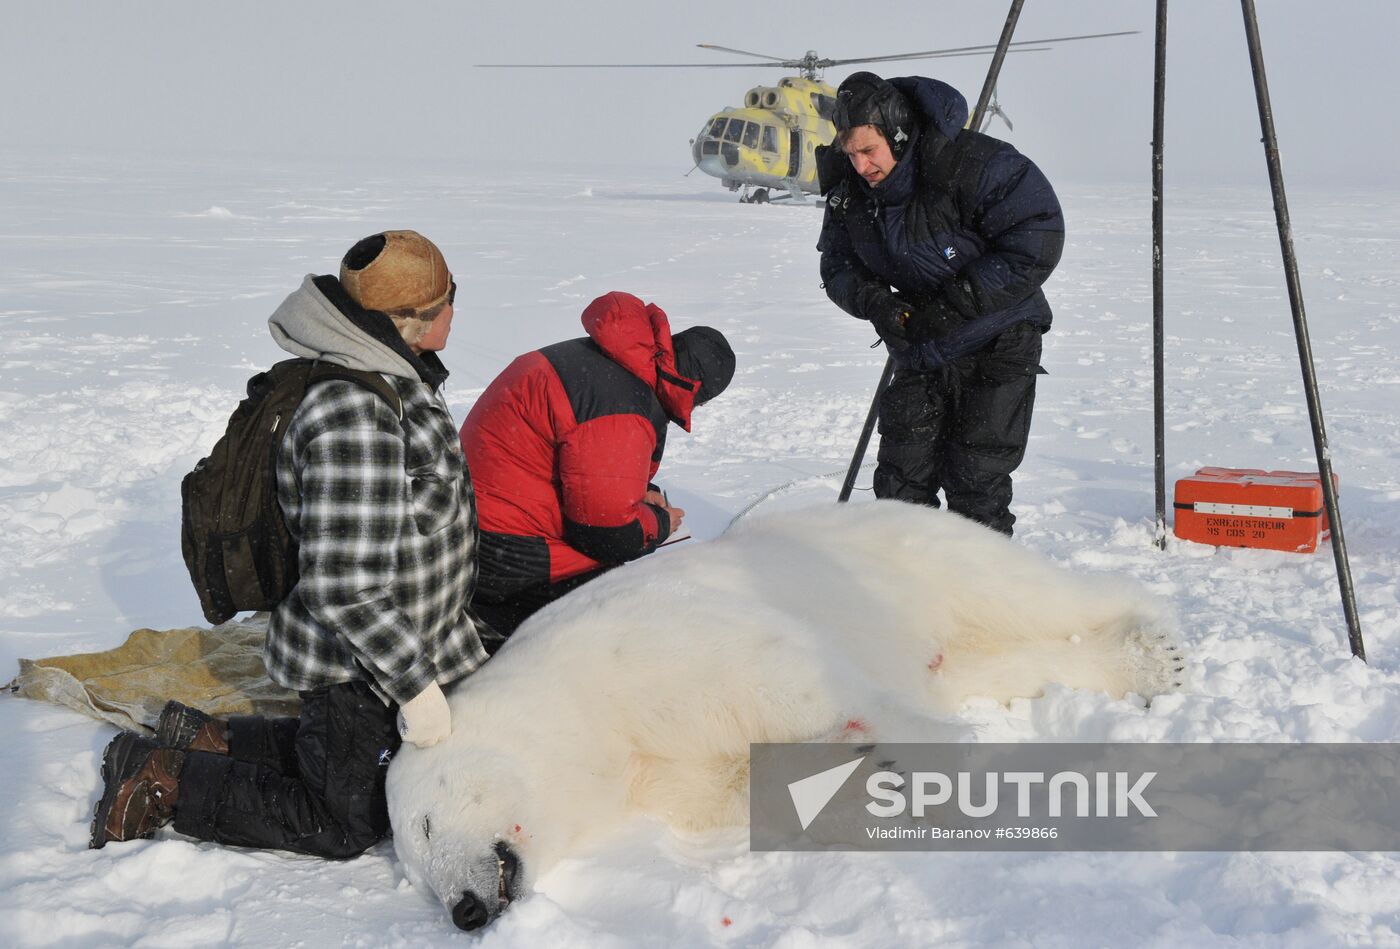 Polar bear at Franz Josef Land archipelago